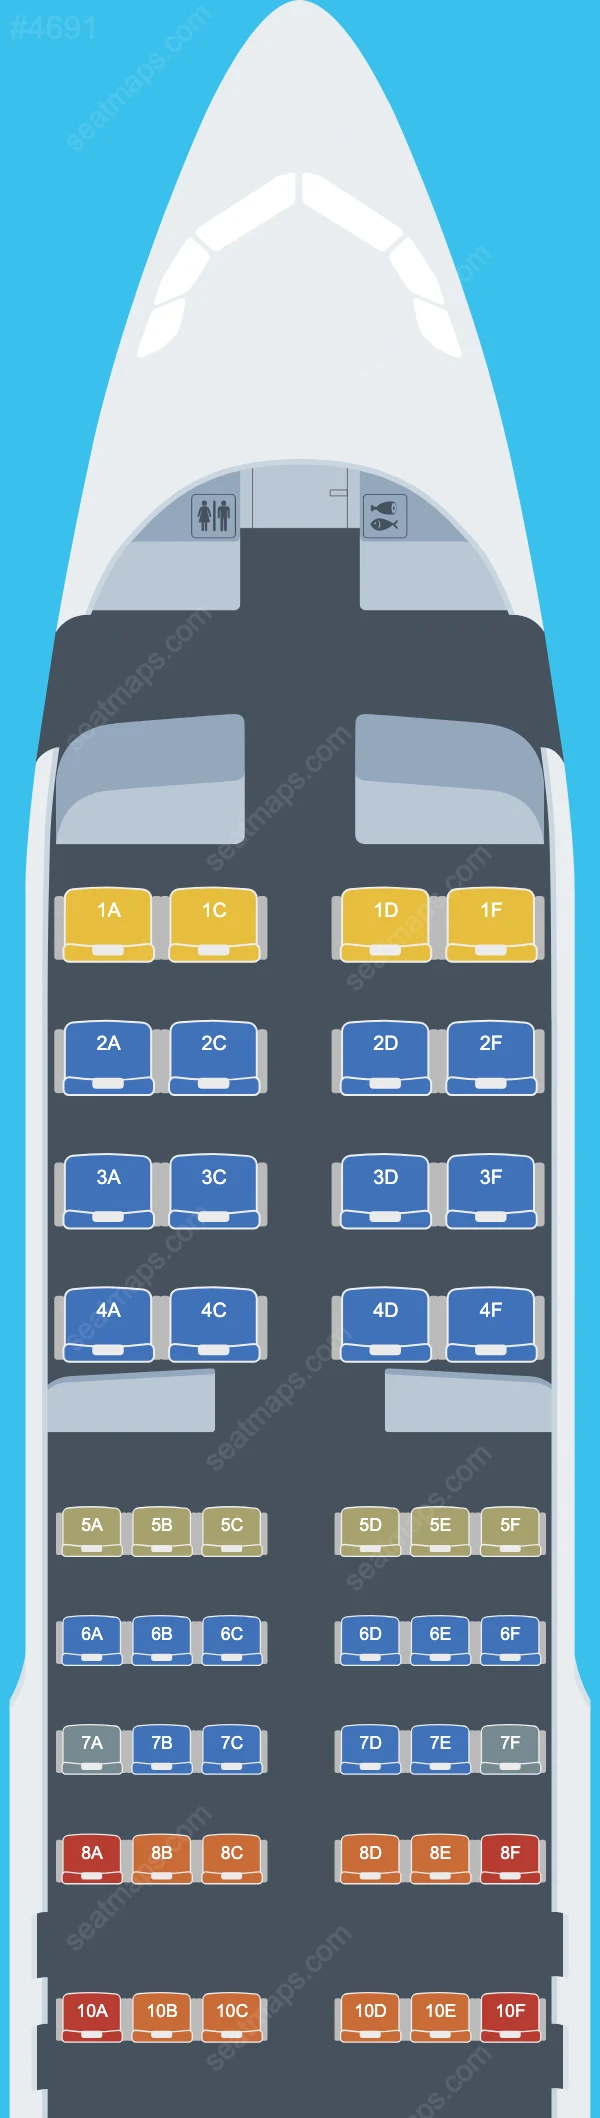 Afriqiyah Airways Airbus A320 Seat Maps A320-200